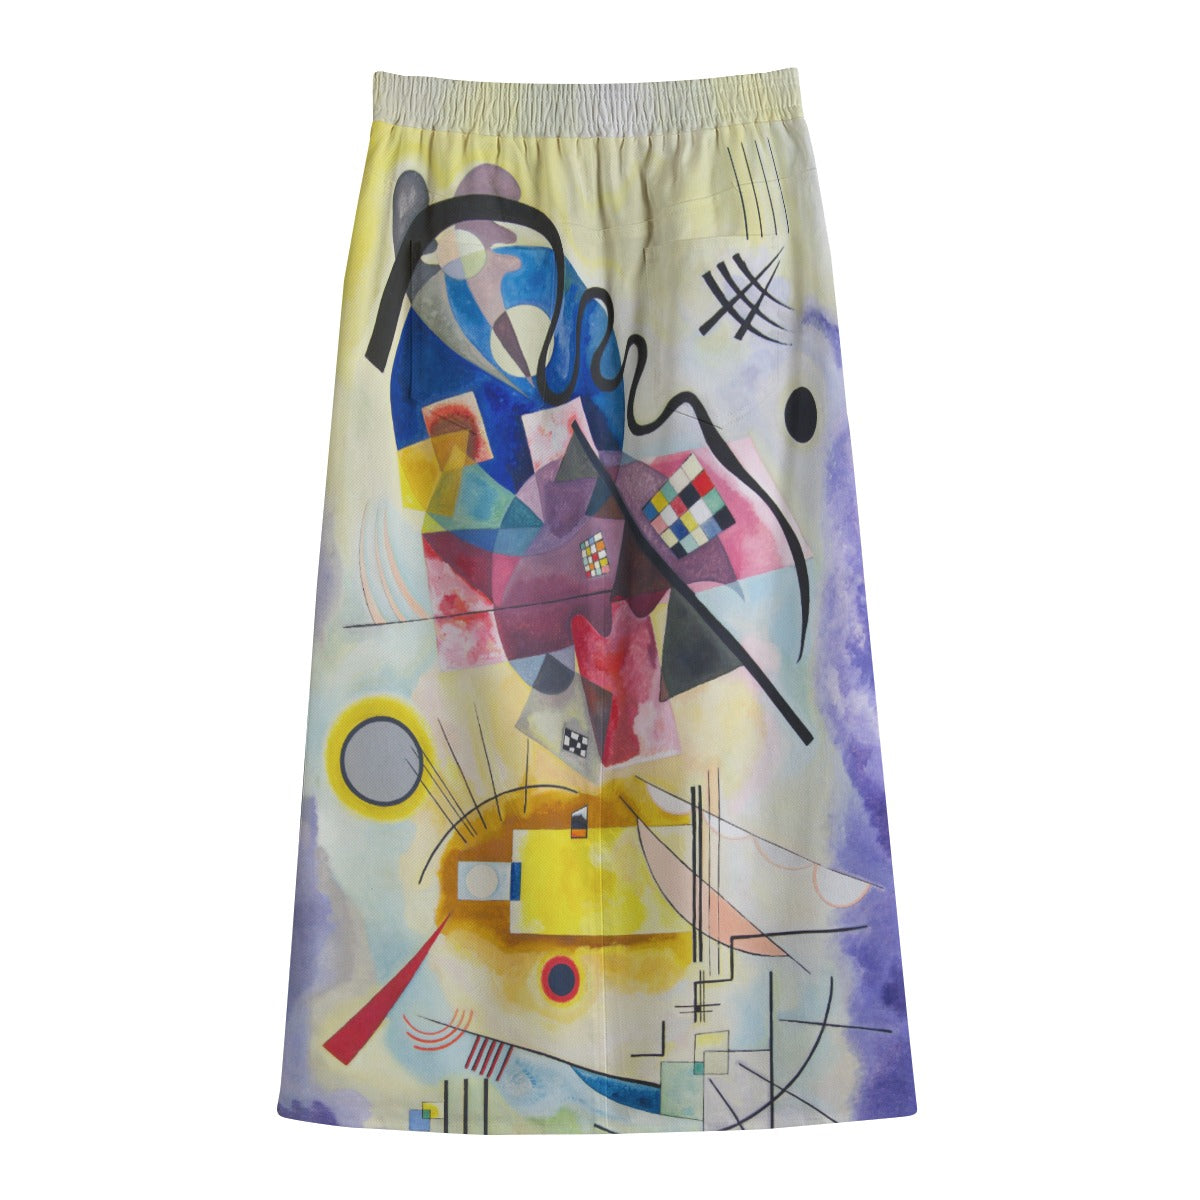 Vibrant women's midi skirt with artistic design